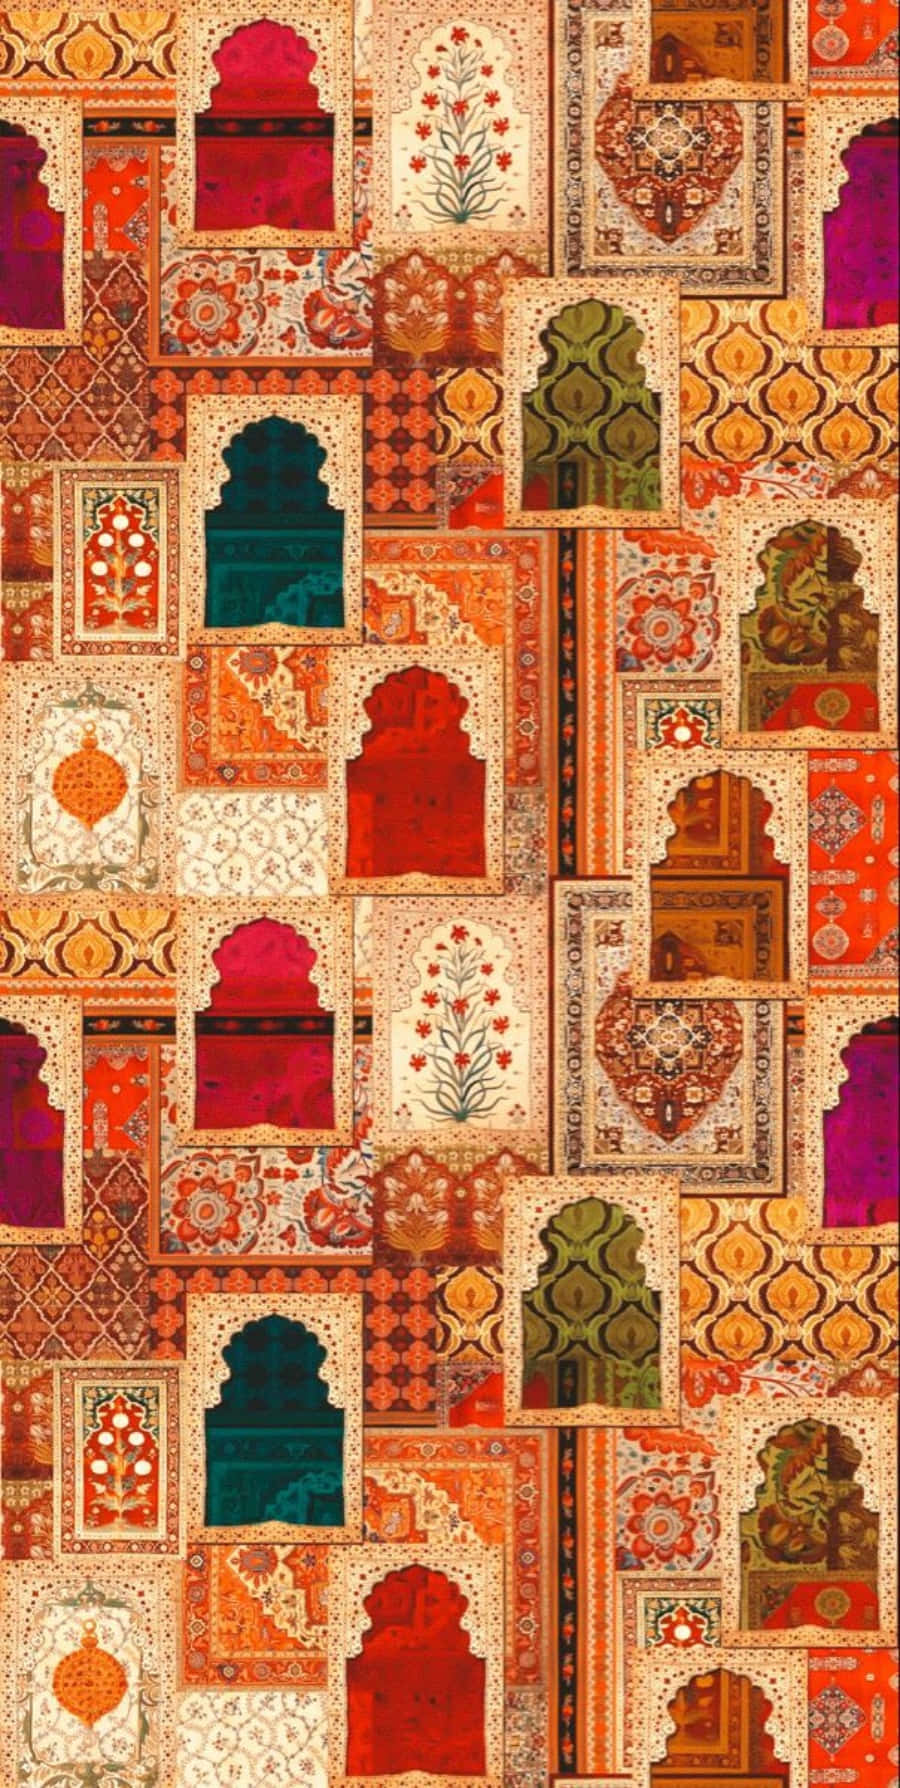 Intricate Textile Art Wallpaper